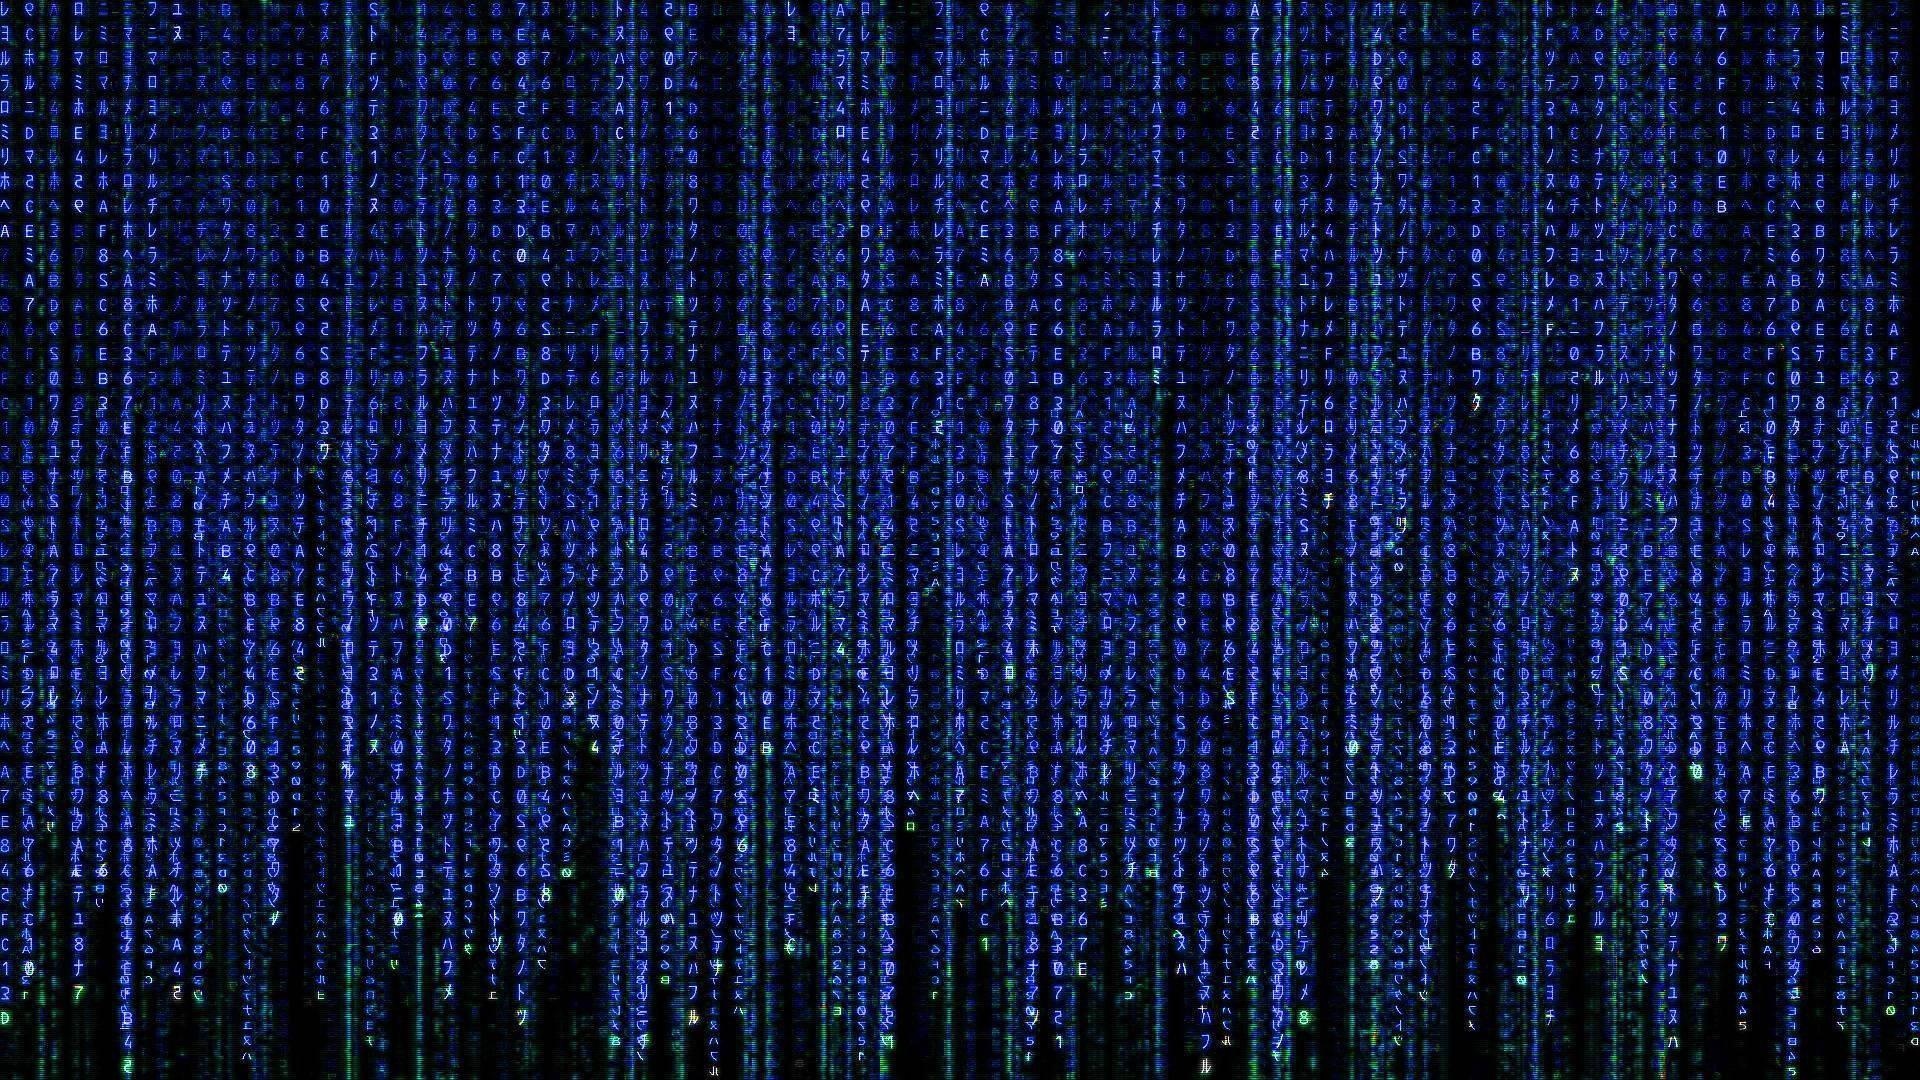 Free Matrix Wallpaper Downloads, [100+] Matrix Wallpapers for FREE |  